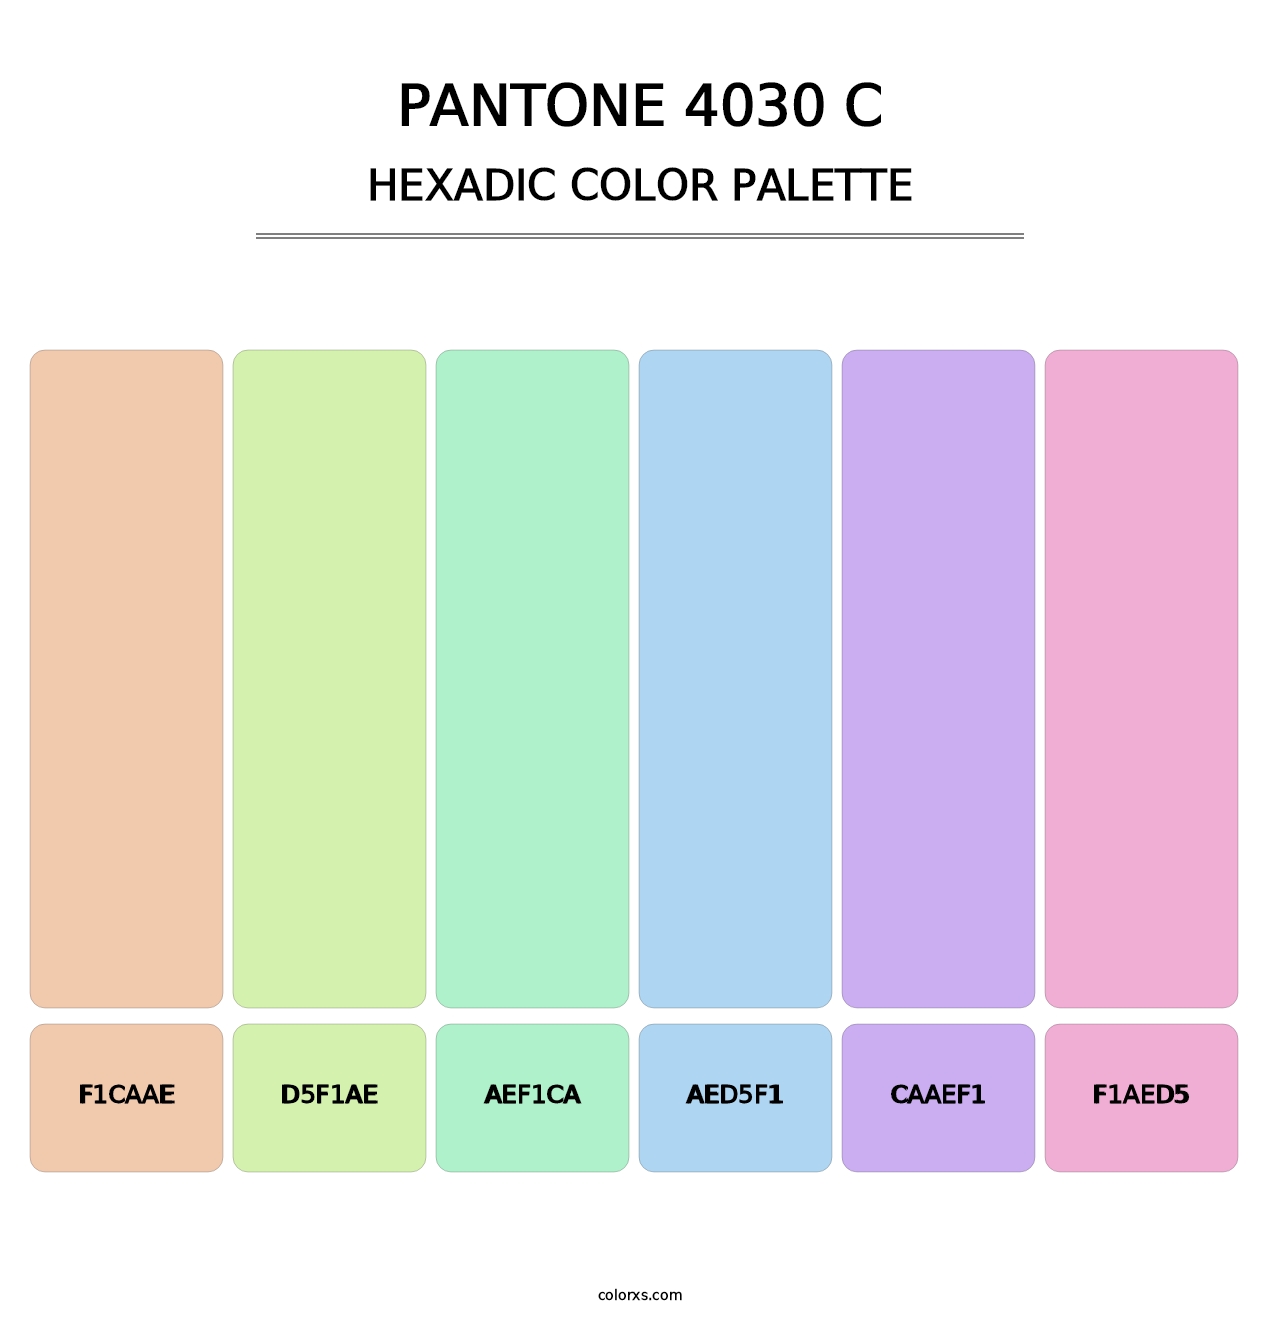 PANTONE 4030 C - Hexadic Color Palette